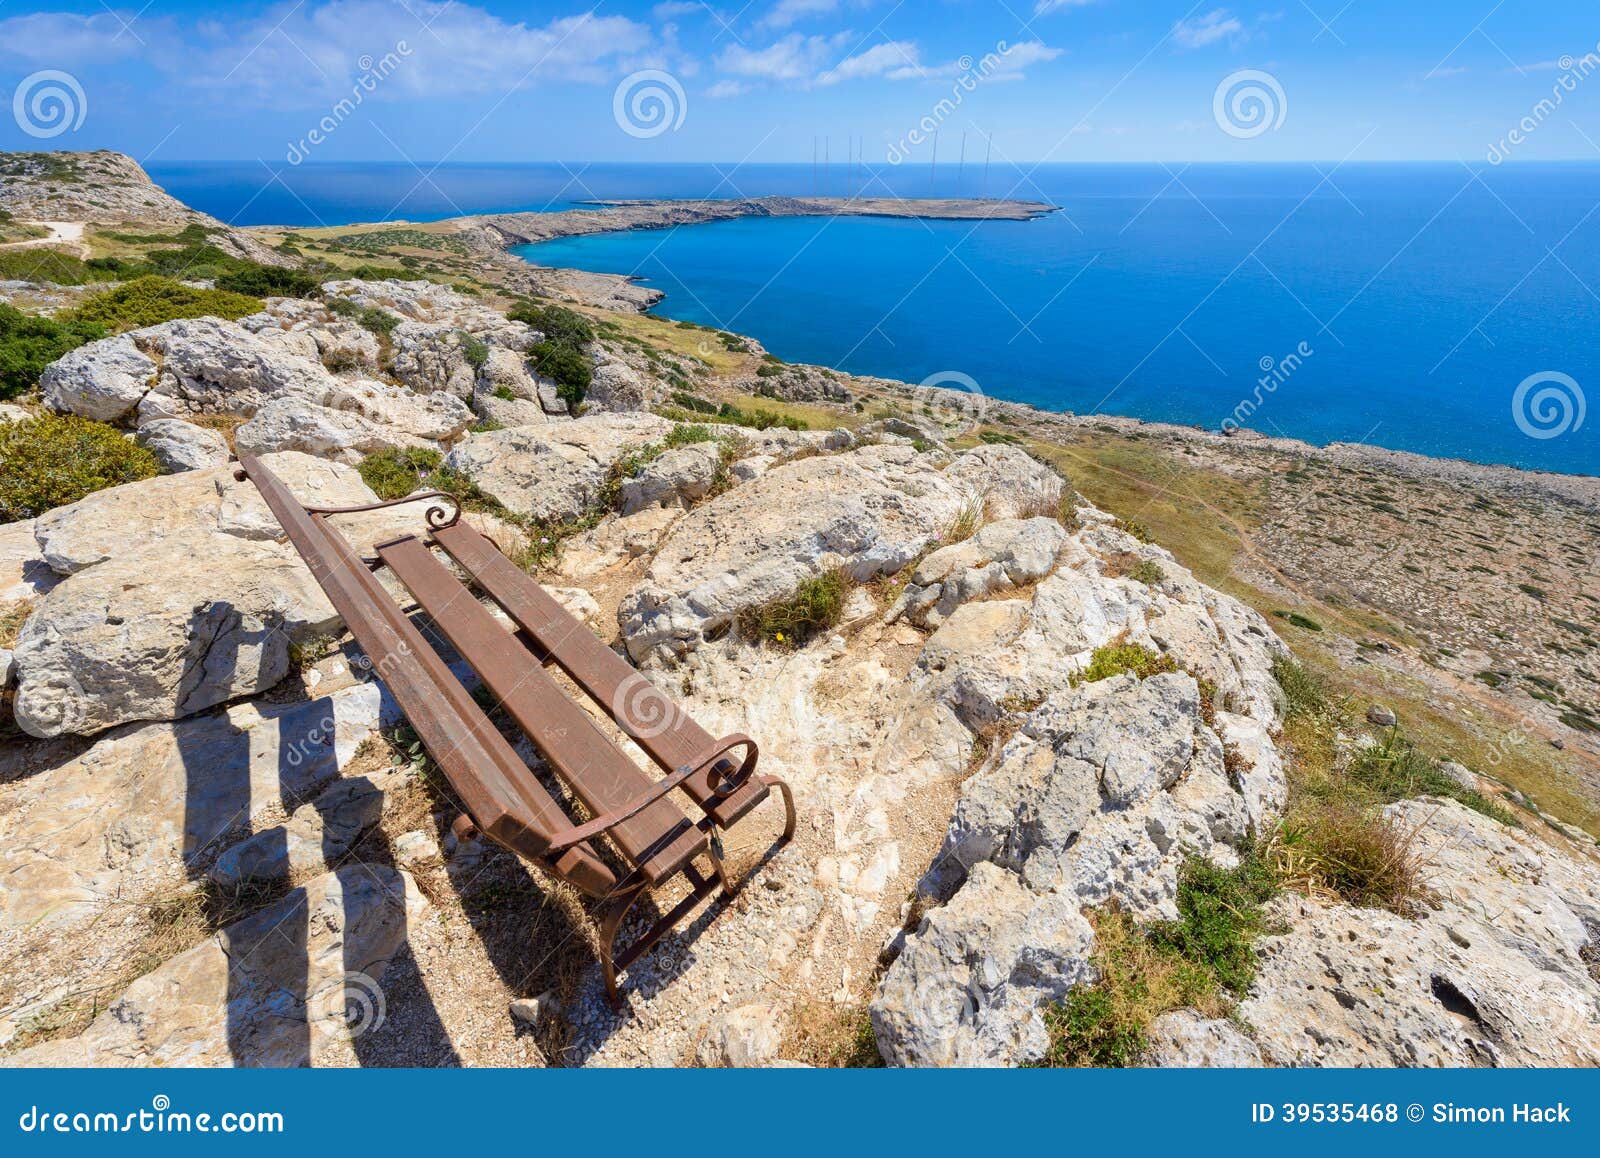 cape greco coastline bench view,cyprus